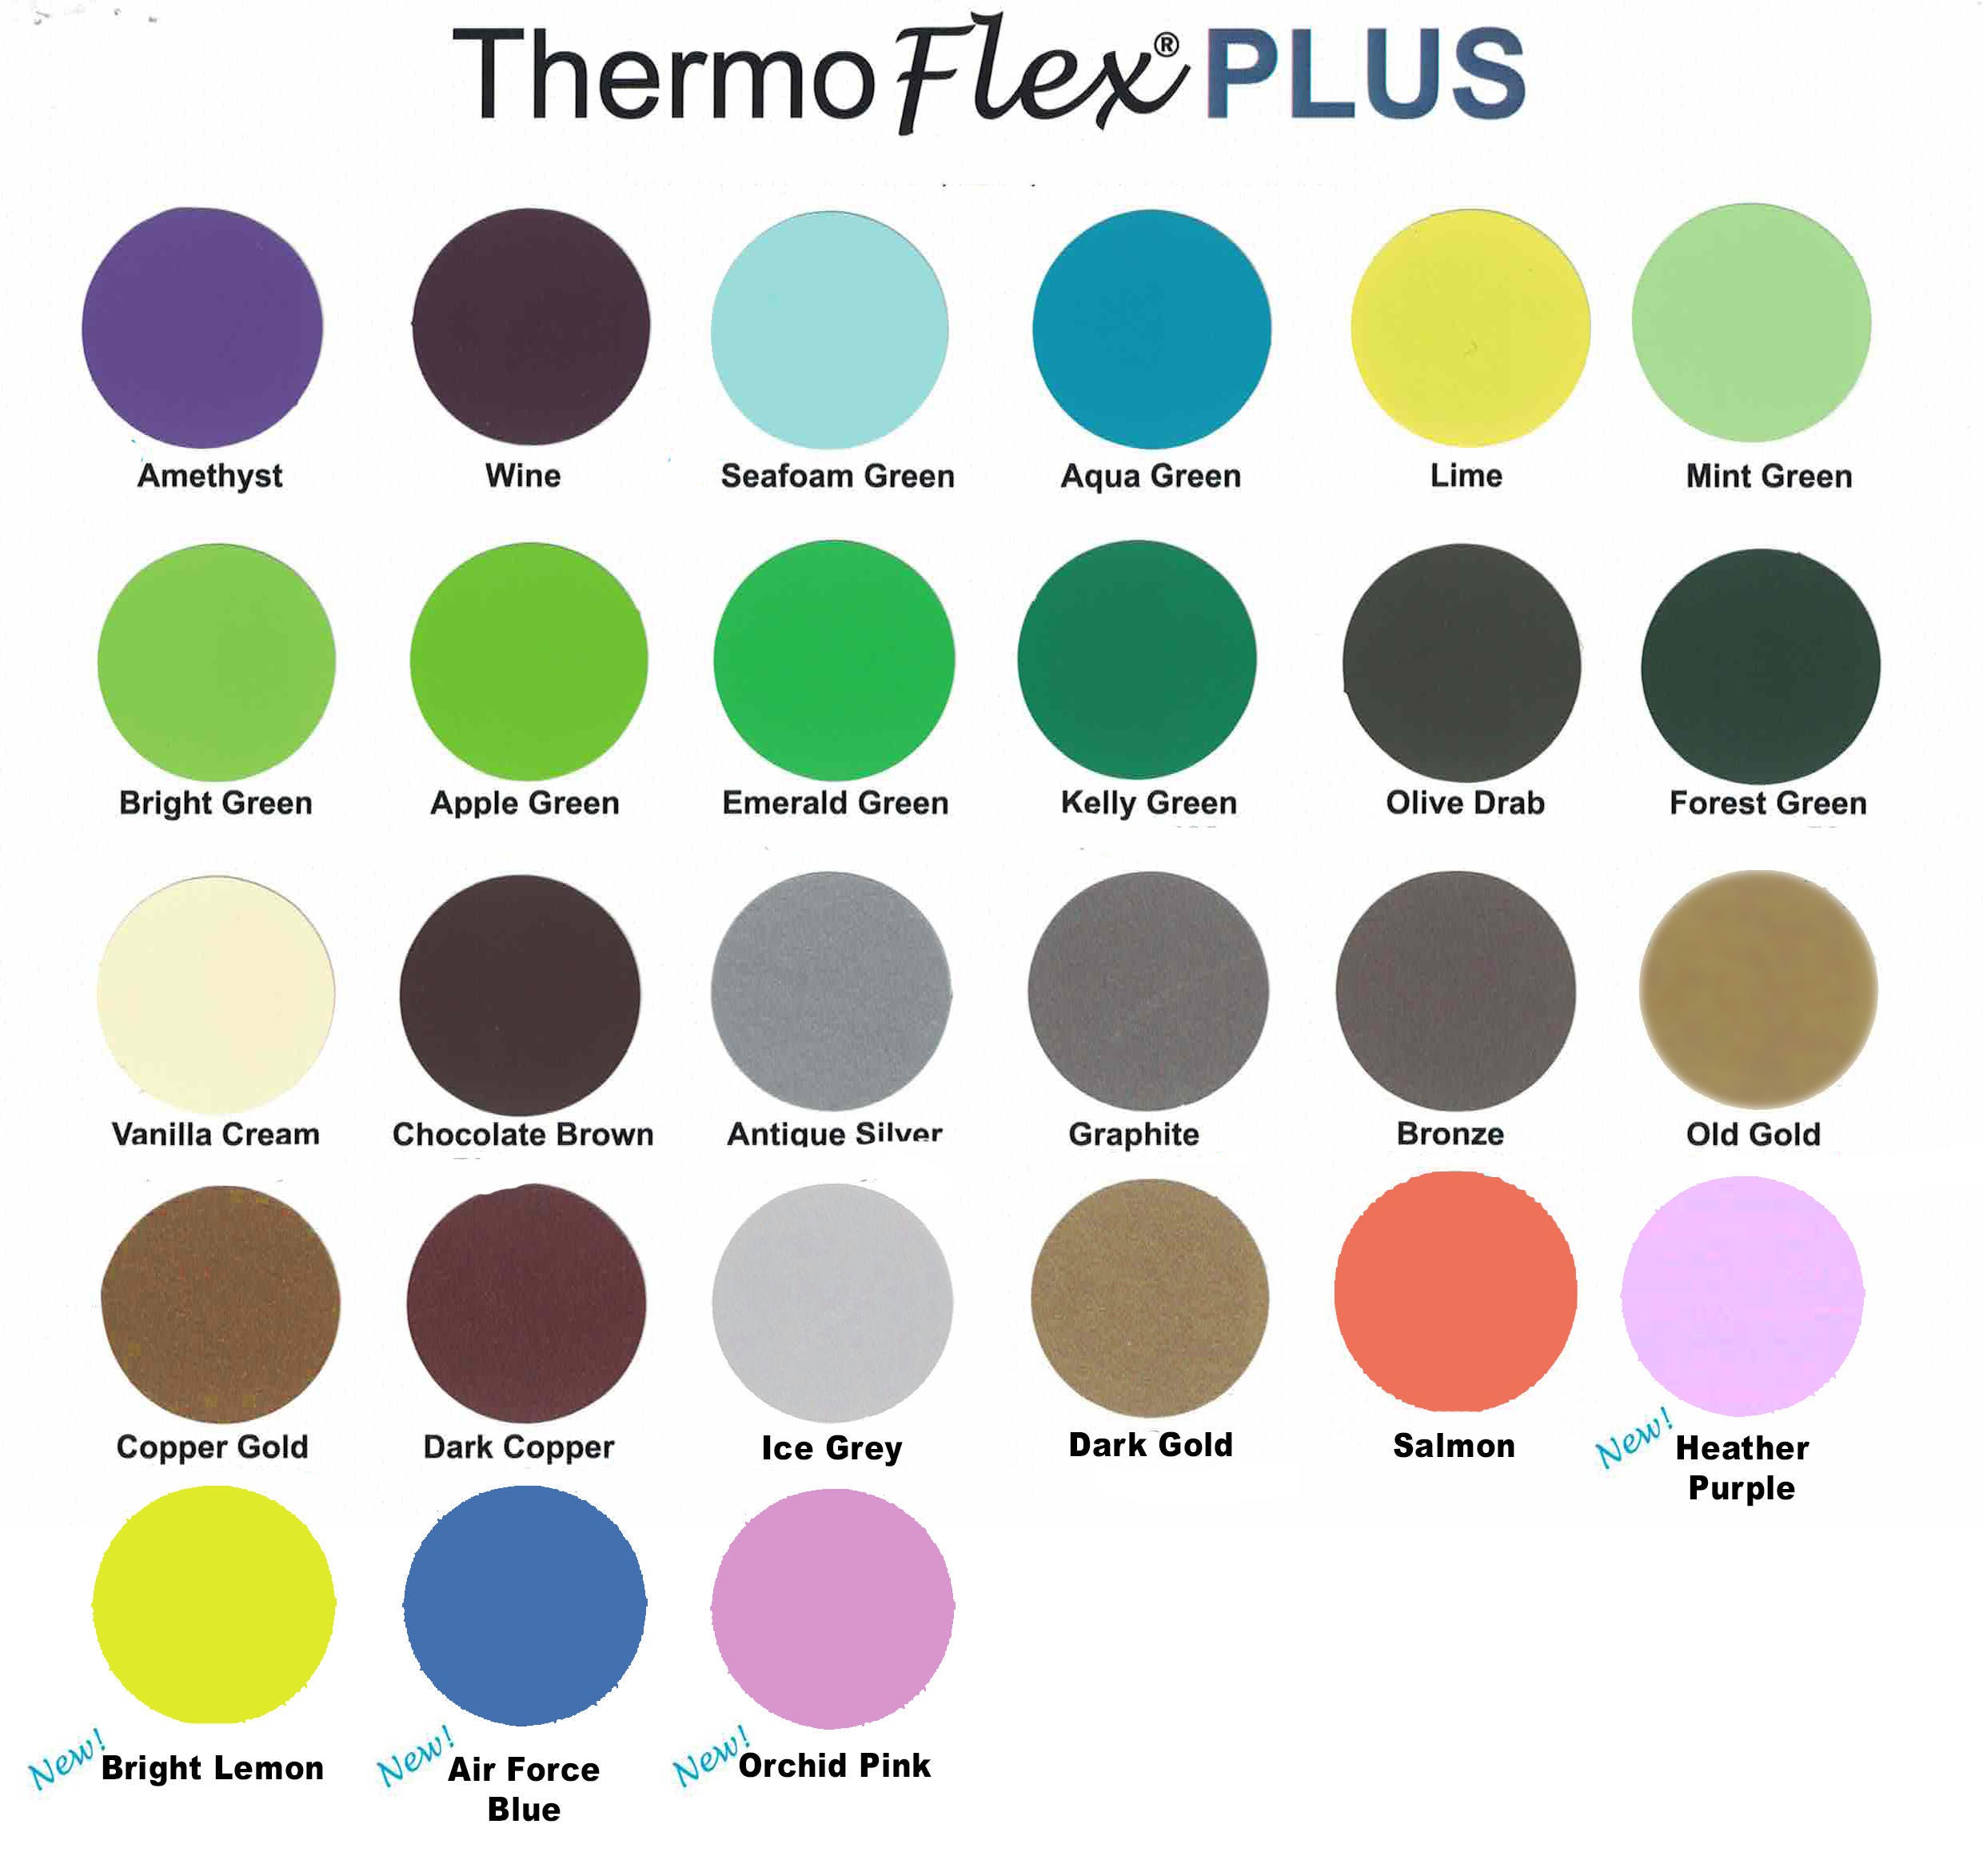 12x 15 / 5-sheets / ThermoFlex Plus Heat